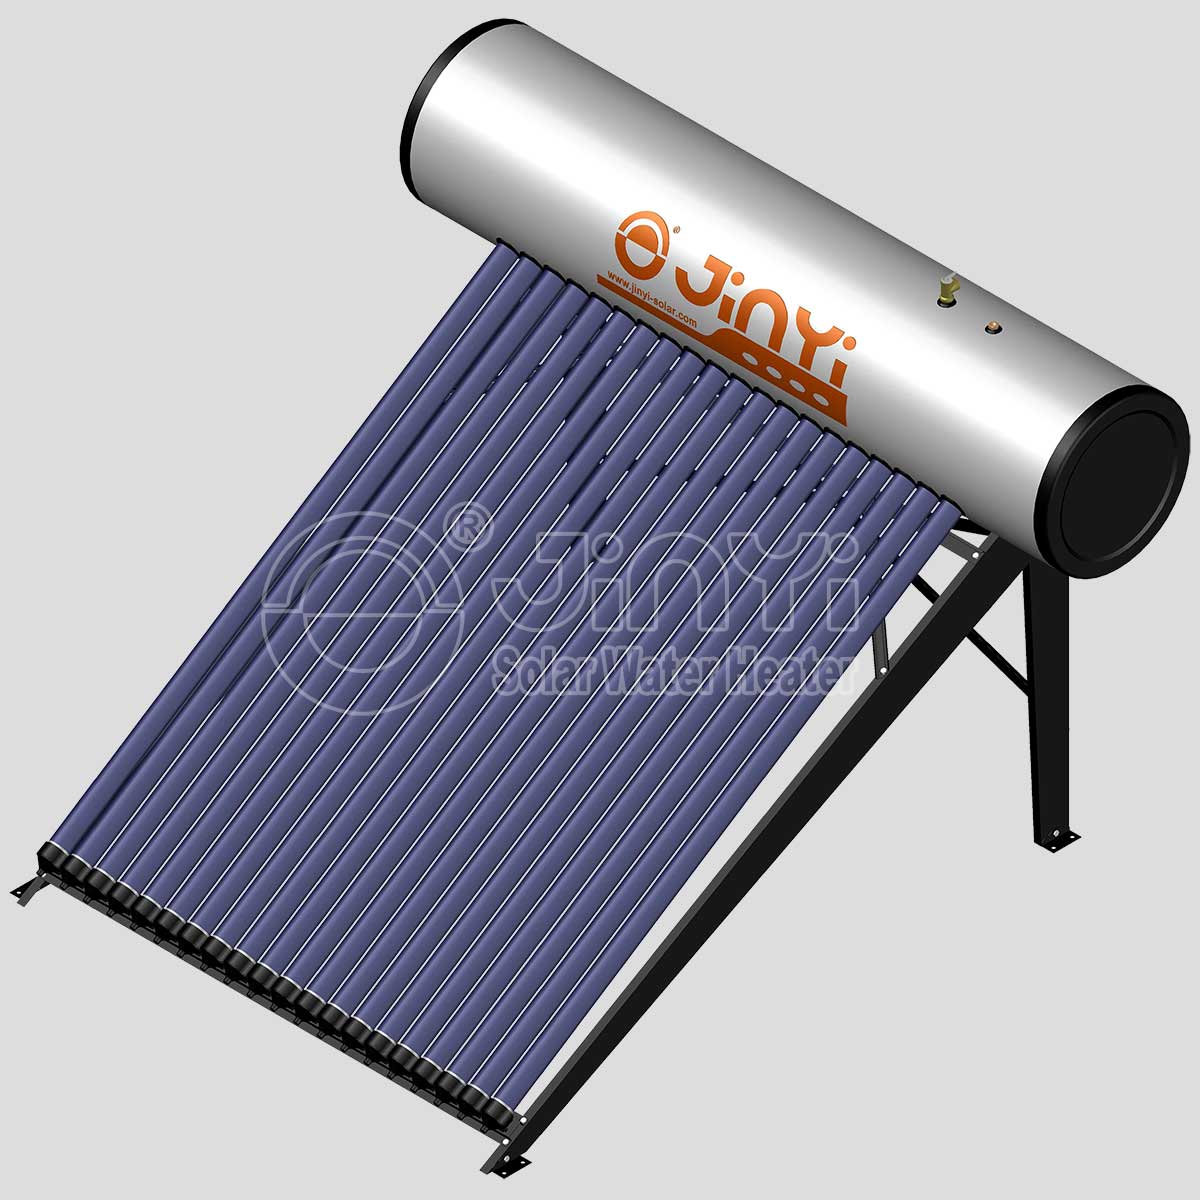 Pressurized Solar Water Heater Installation Display Flat Roof